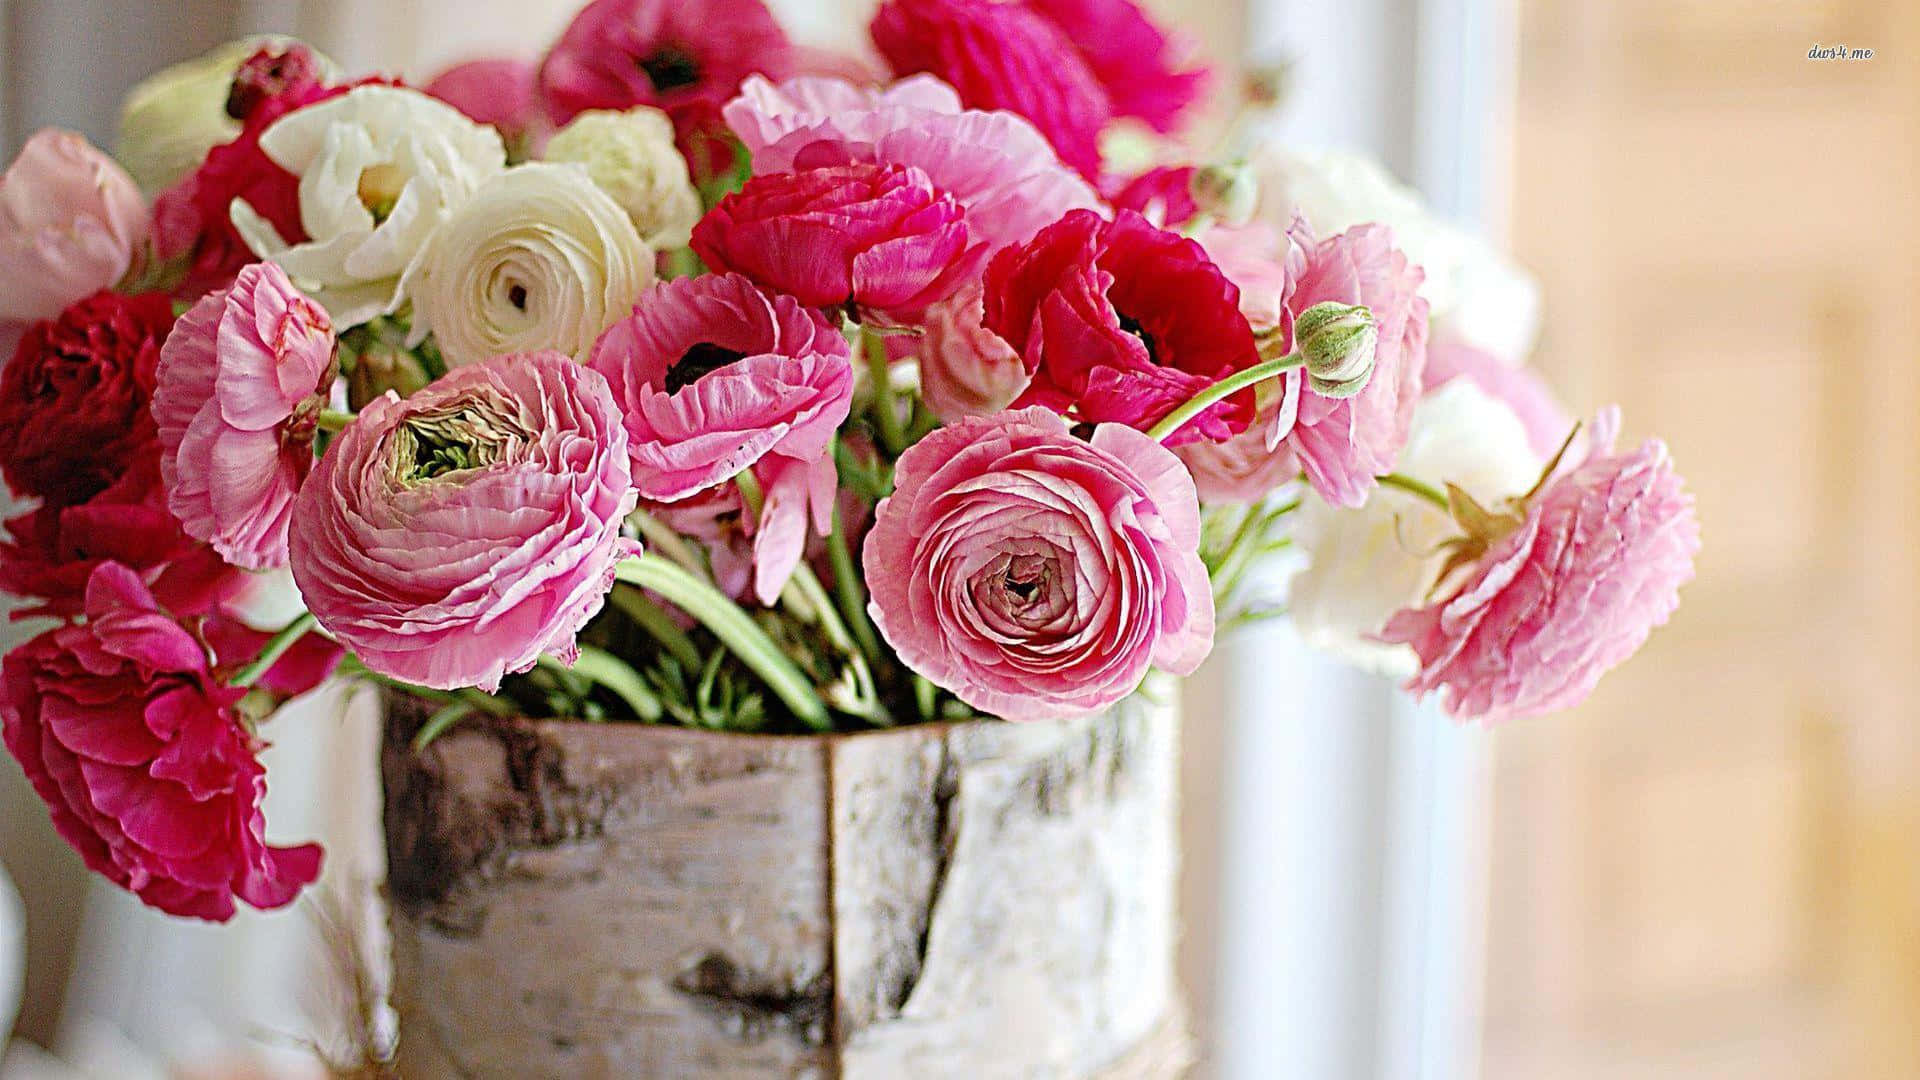 Elegant Fresh Floral Arrangement on Table Wallpaper